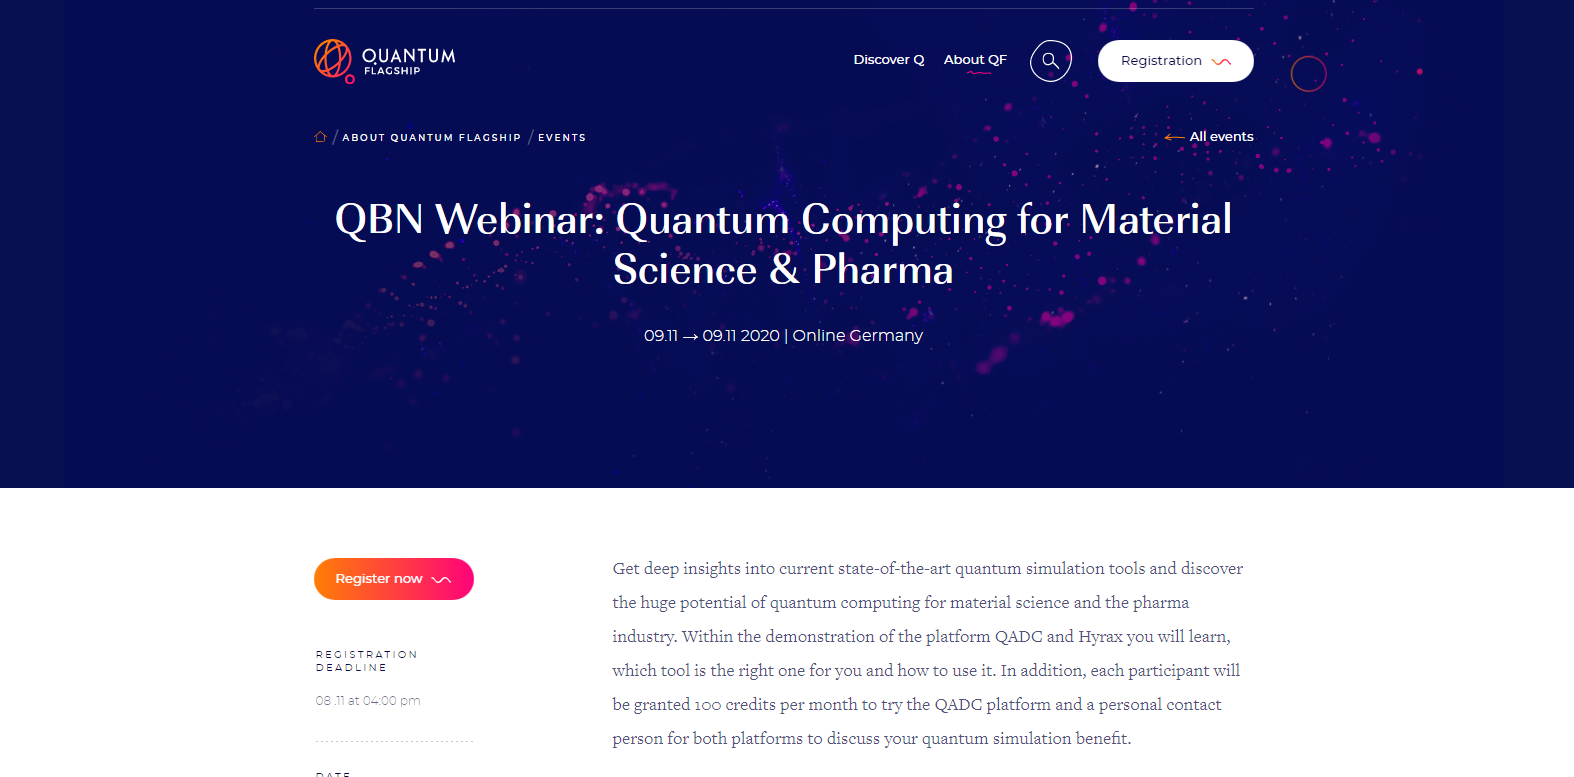 QBN Webinar: Quantum Computing for Material Science & Pharma